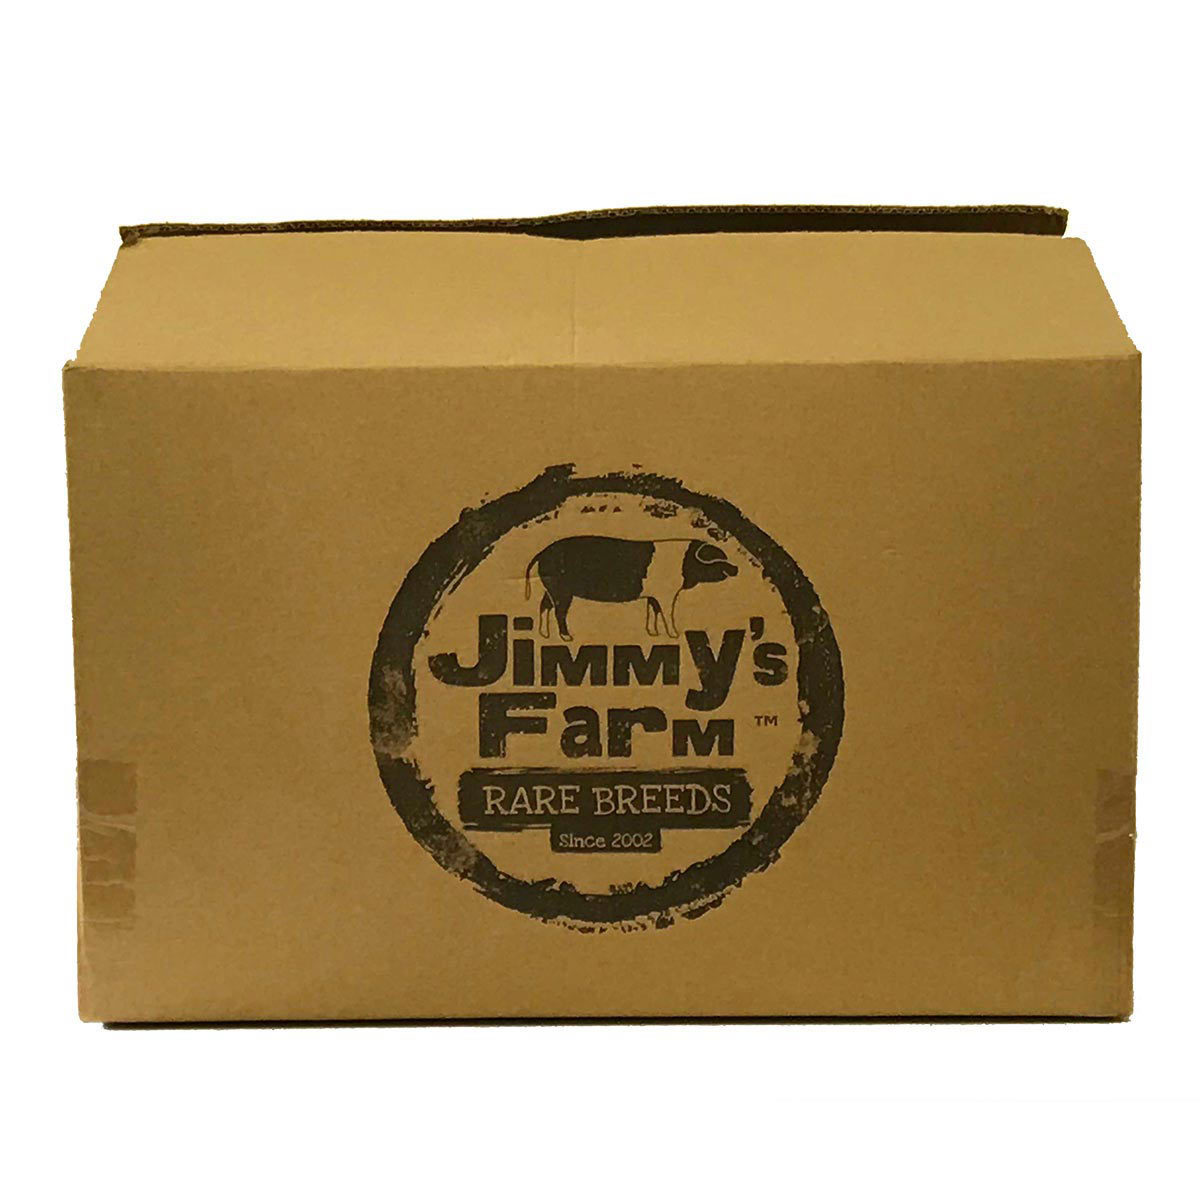 Jimmy's Farm Free Range Dry Aged Bronze Turkey, 5kg Minimum Weight (Serves 10-12 People)